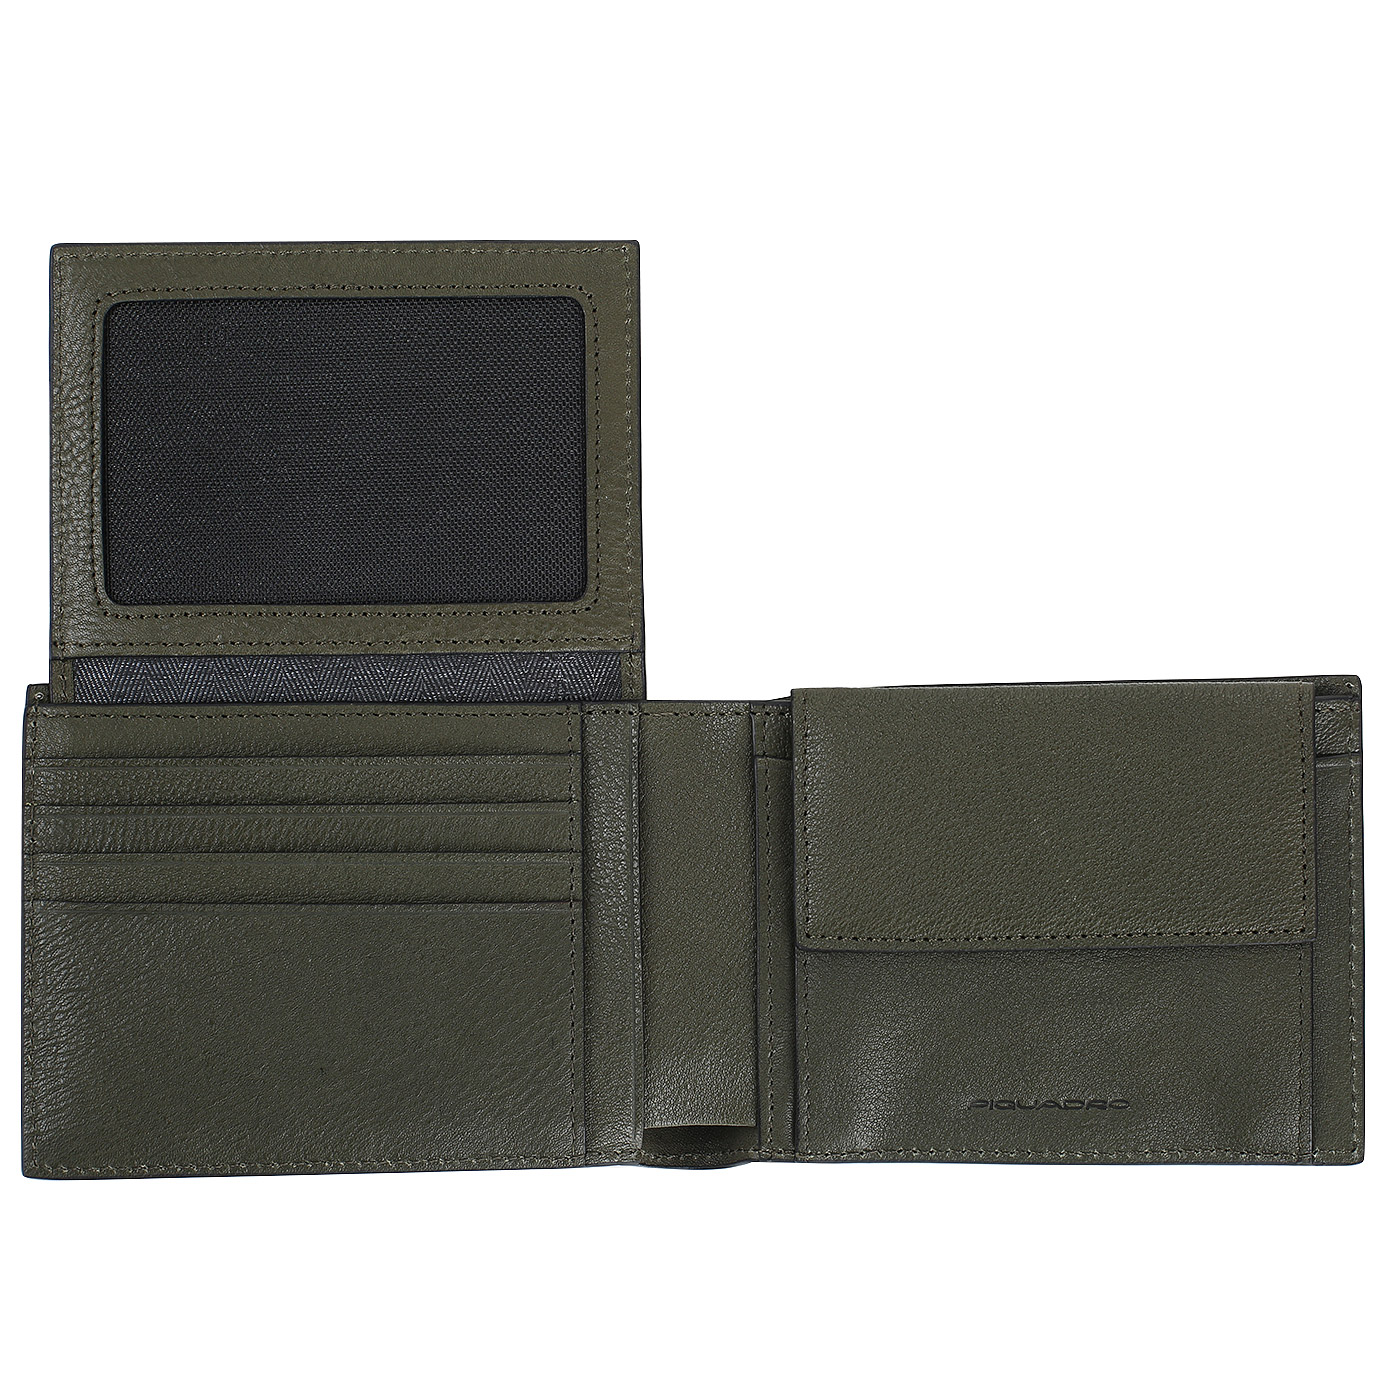 Компактное портмоне из кожи Piquadro Black square